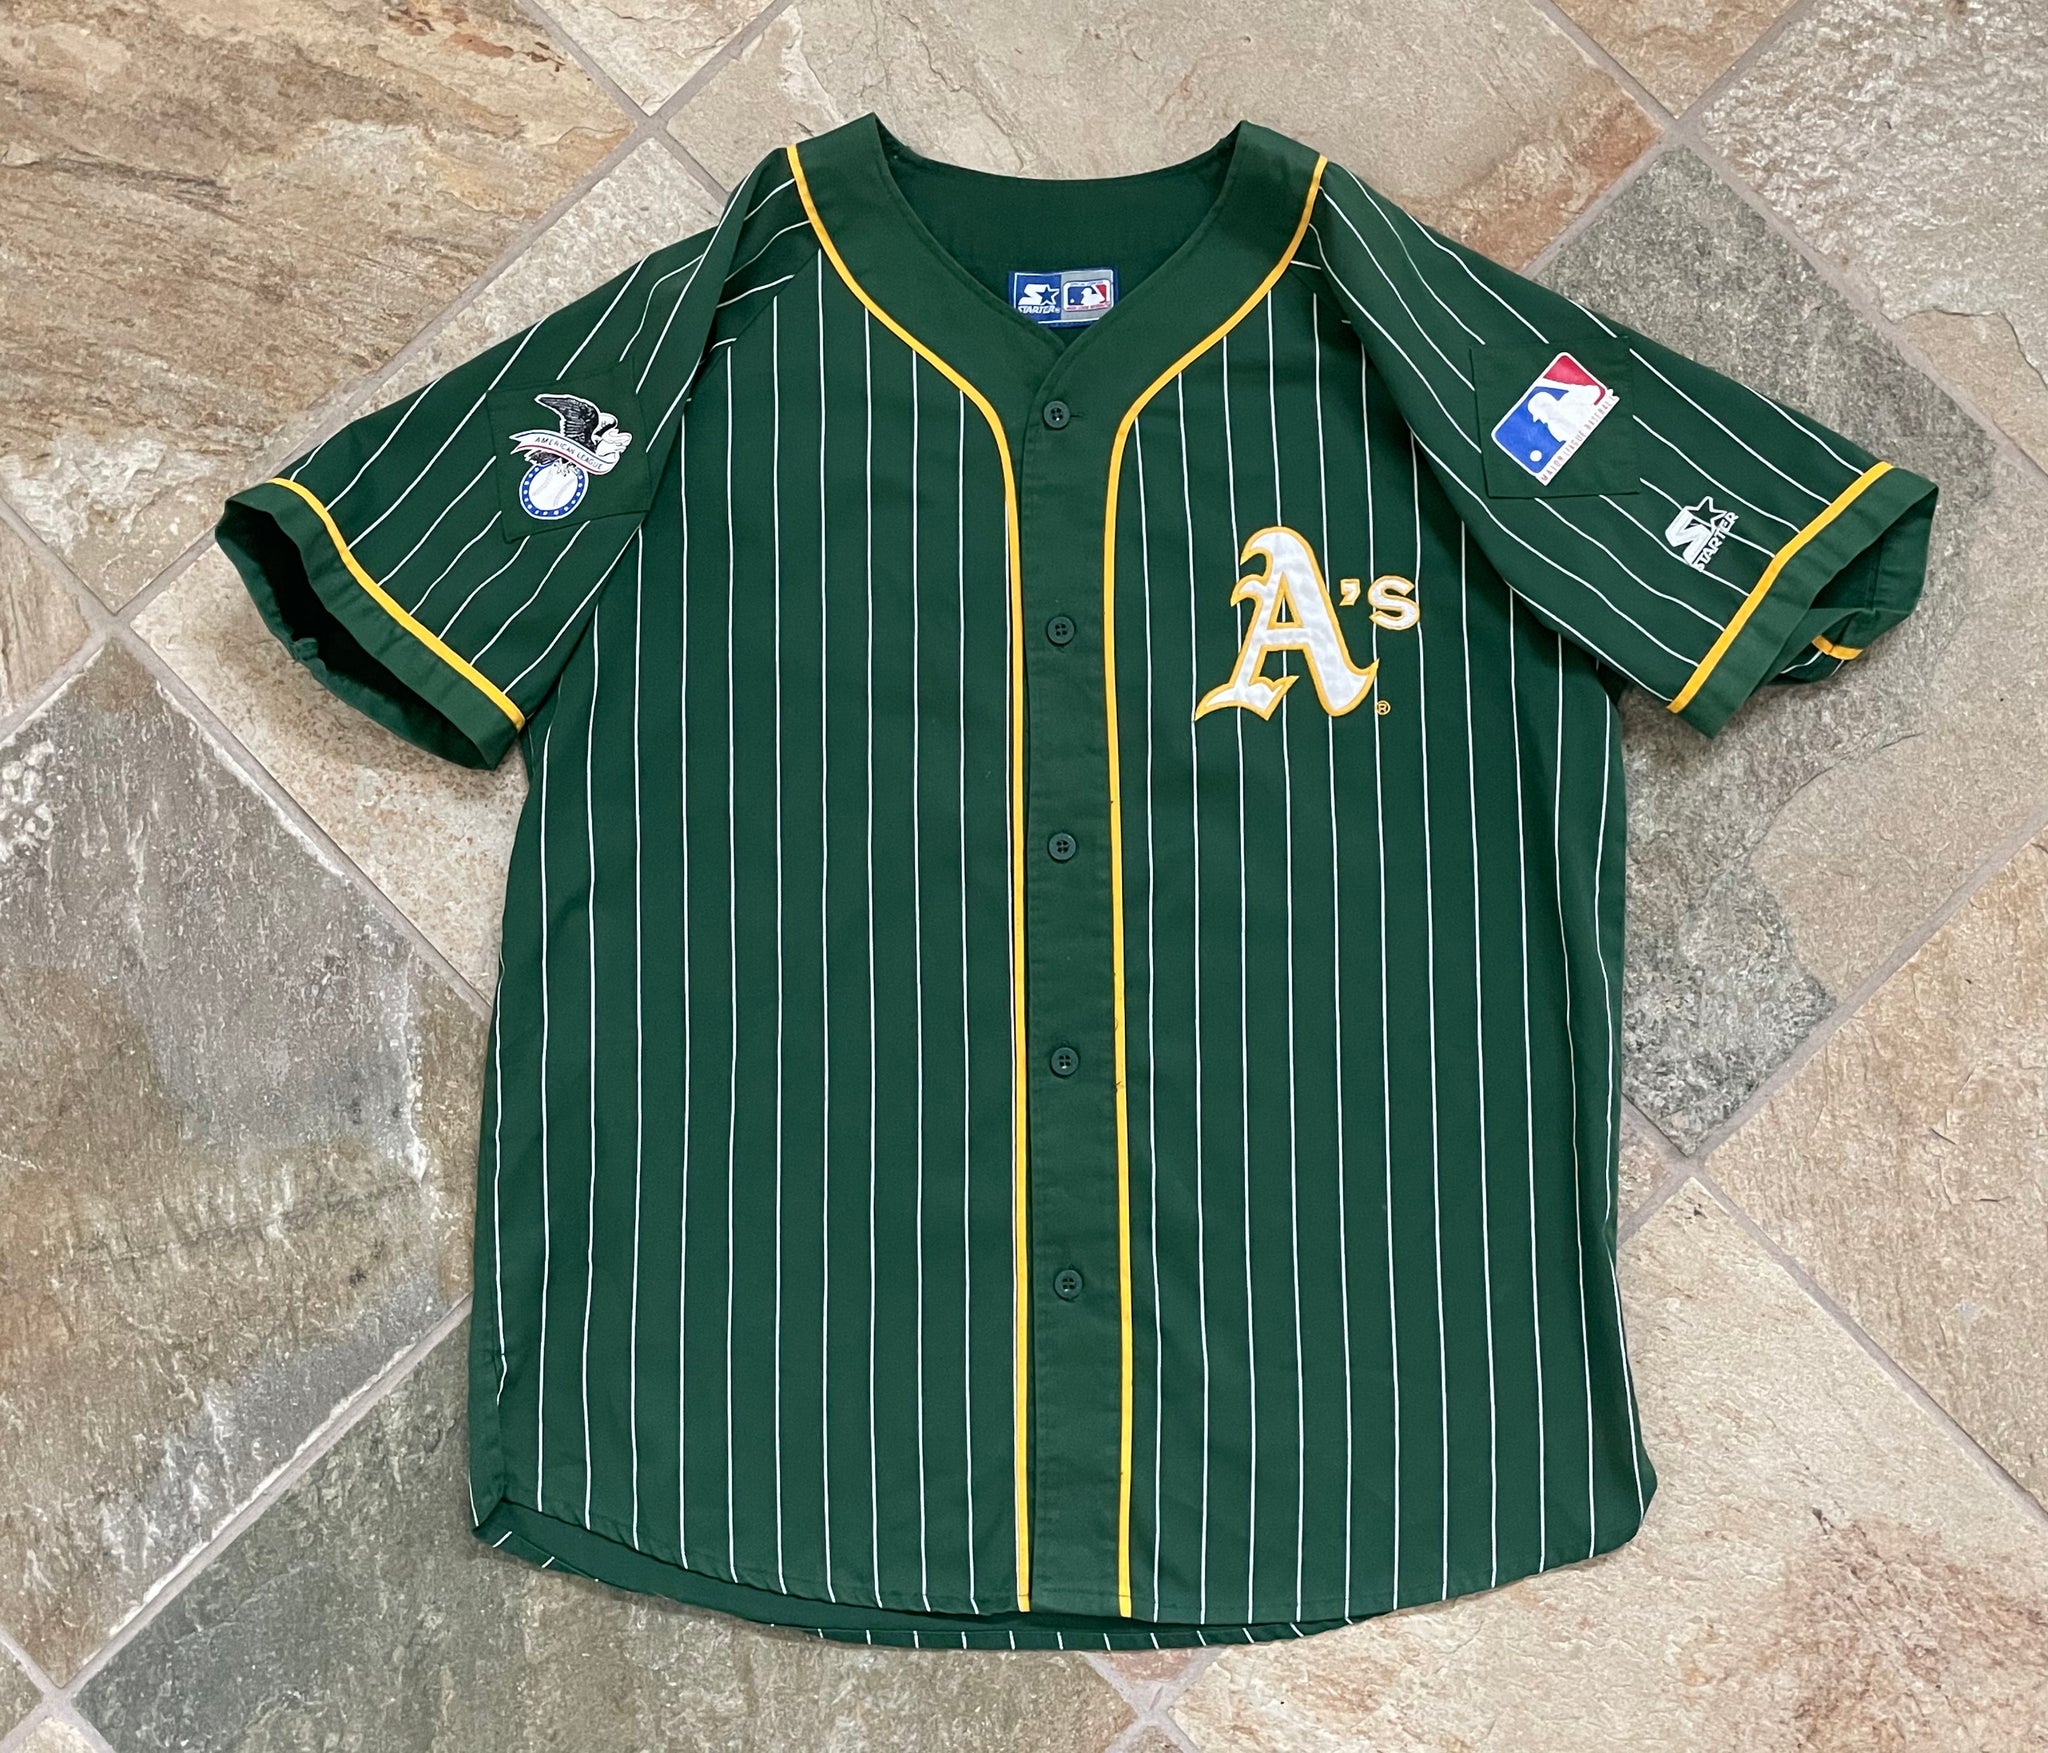 Oakland Athletics Jerseys, A's Baseball Jerseys, Uniforms